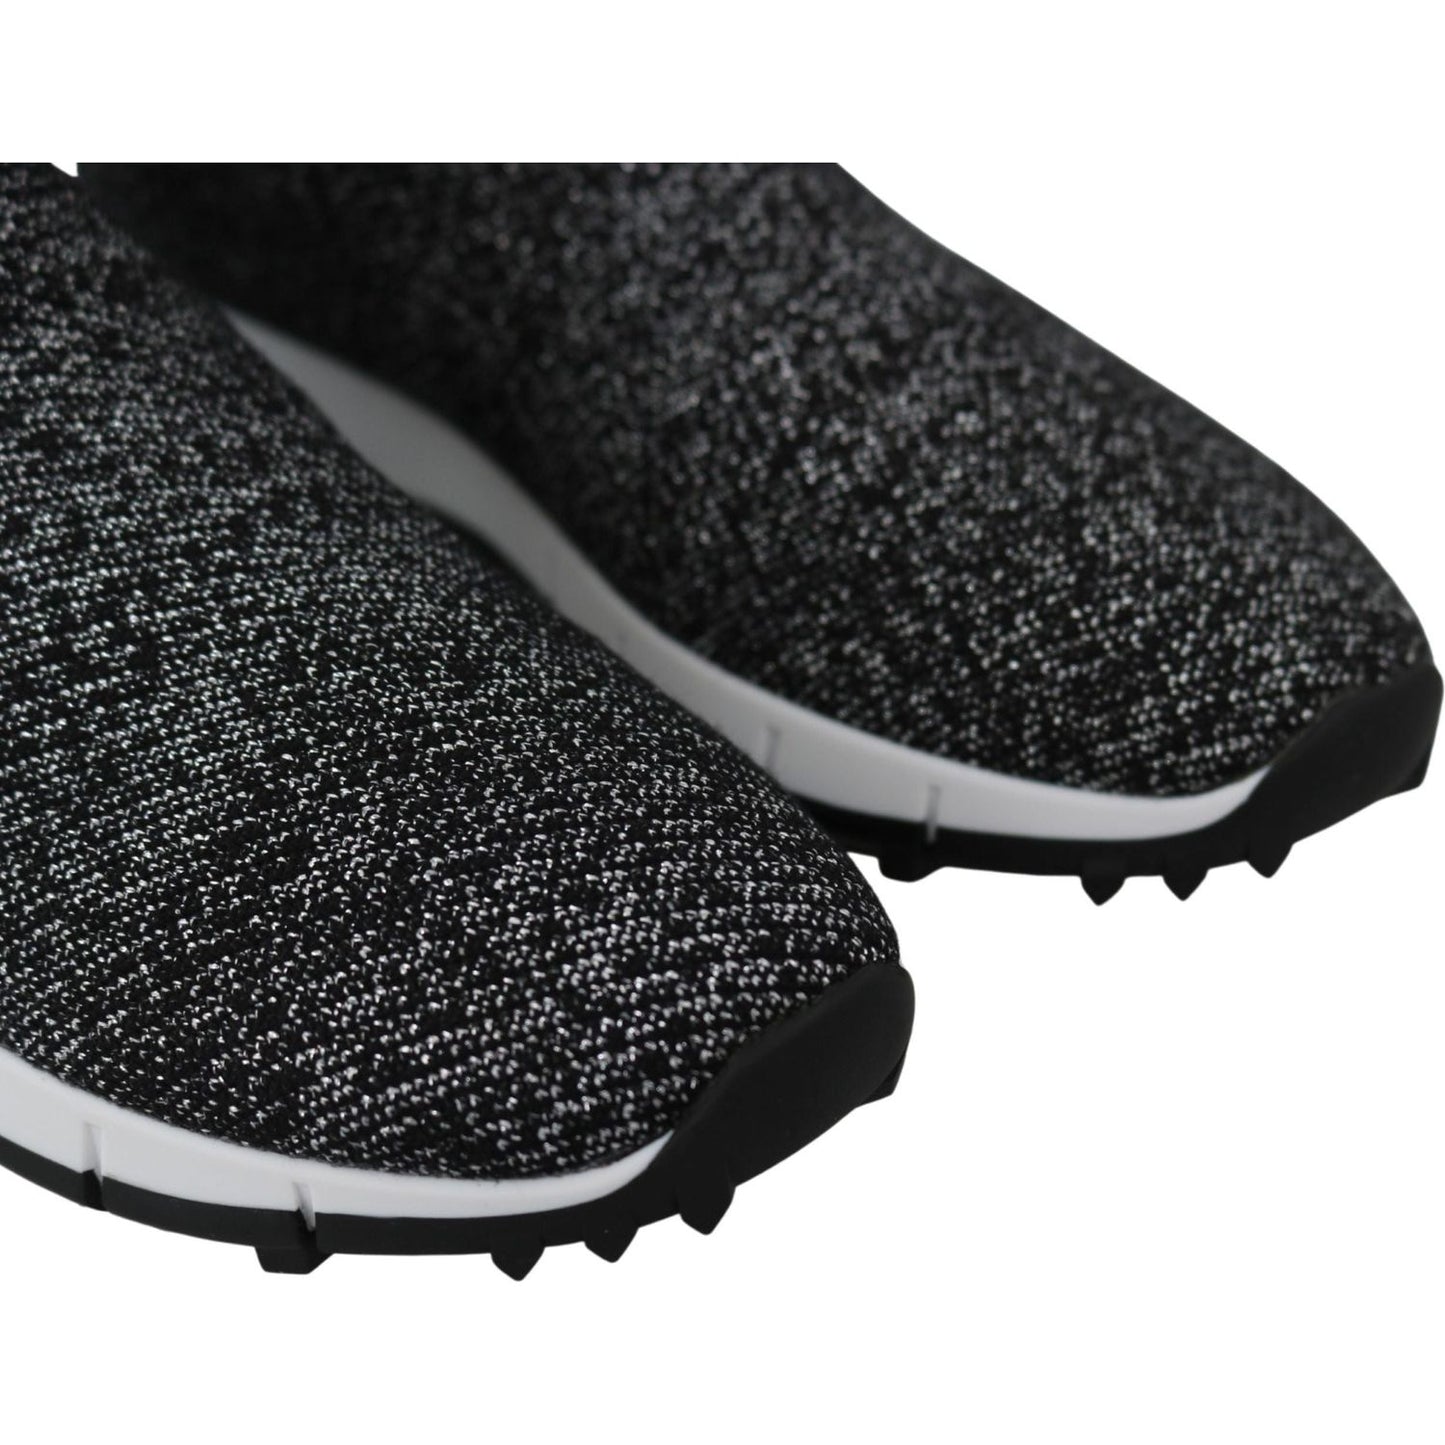 Jimmy Choo Elegant Knitted Lurex Sneakers in Black and Silver black-silver-lurex-mix-norway-sneakers